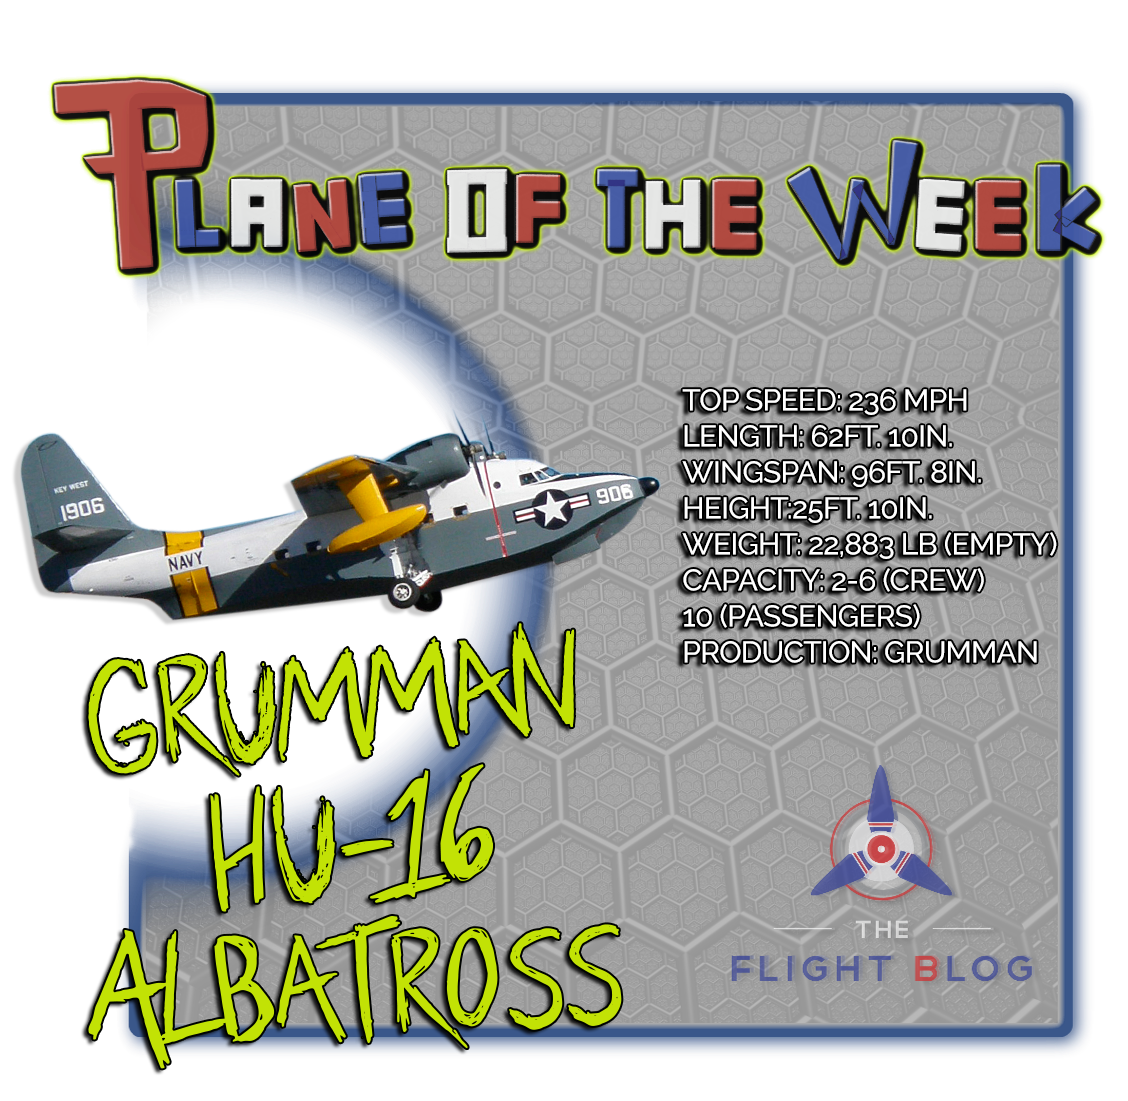 albatross, grumman albatross, grumman HU-16 albatross, plane of the week, the flight blog, albatross specs, plane specs 